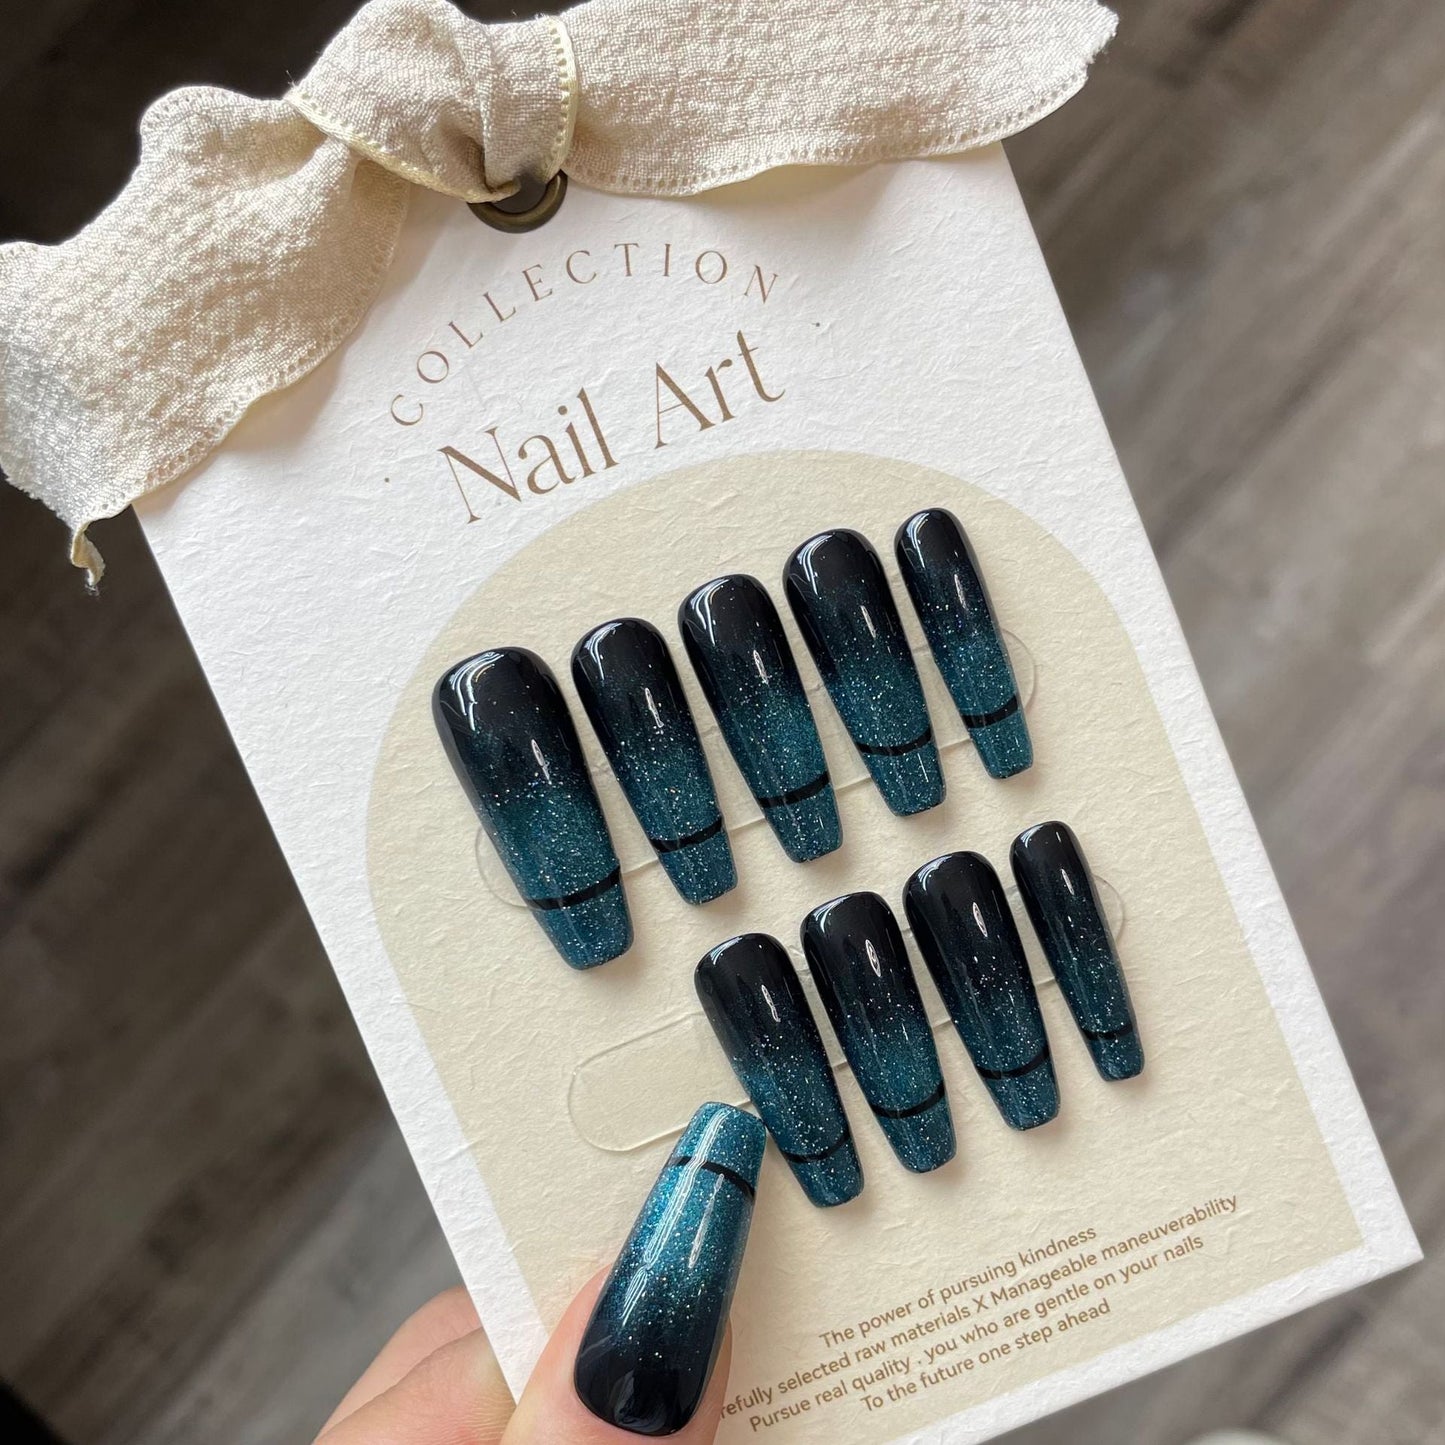 779 Cateye Effect style press on nails 100% handmade false nails black green